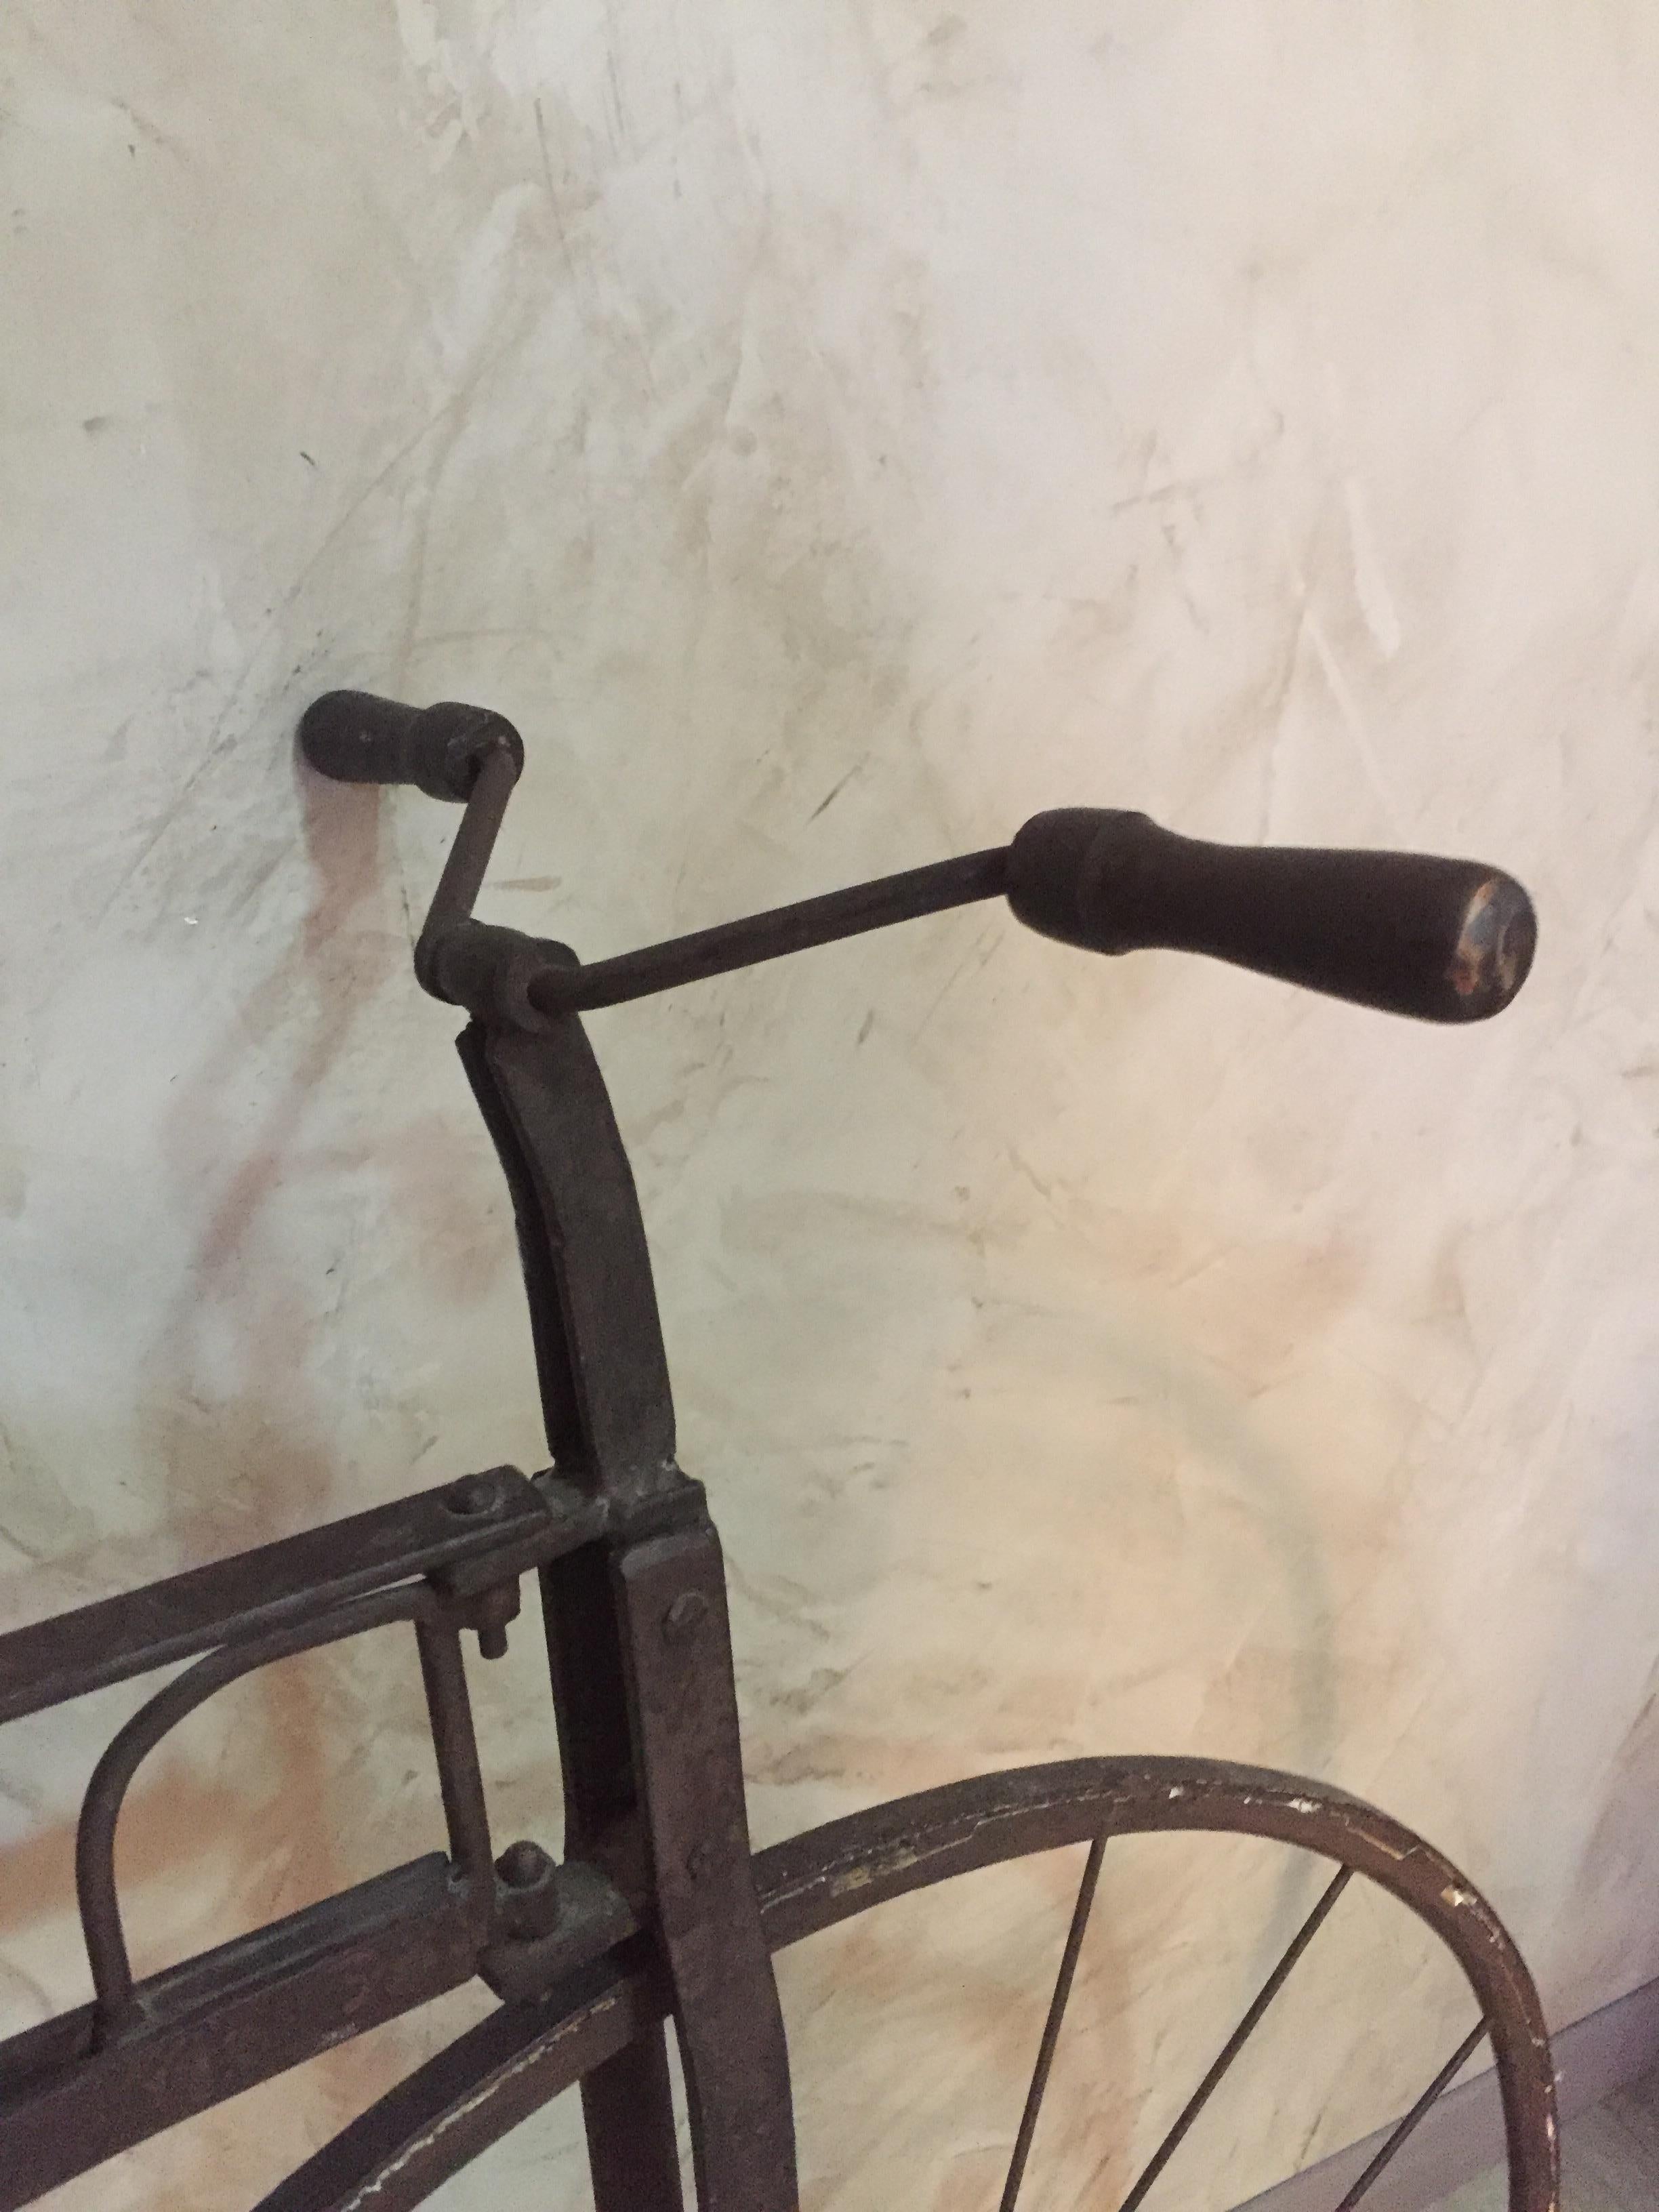 antique bike